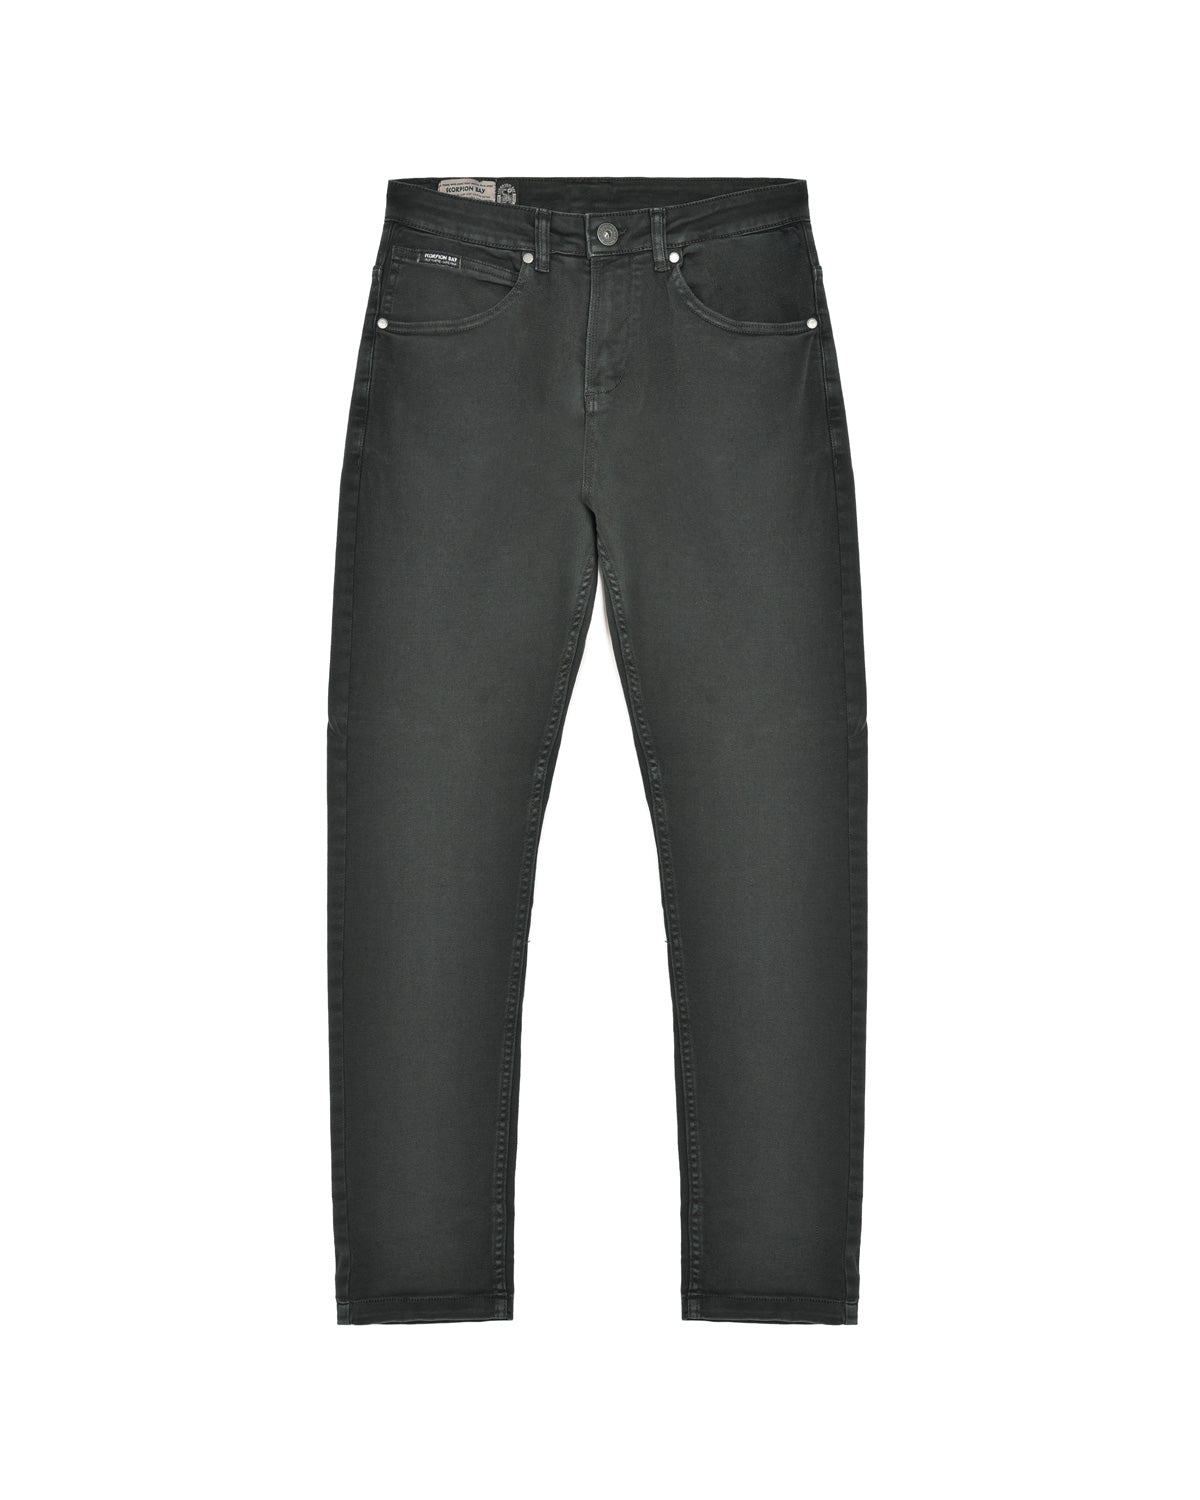 Men's 5-pocket jeans in distressed denim